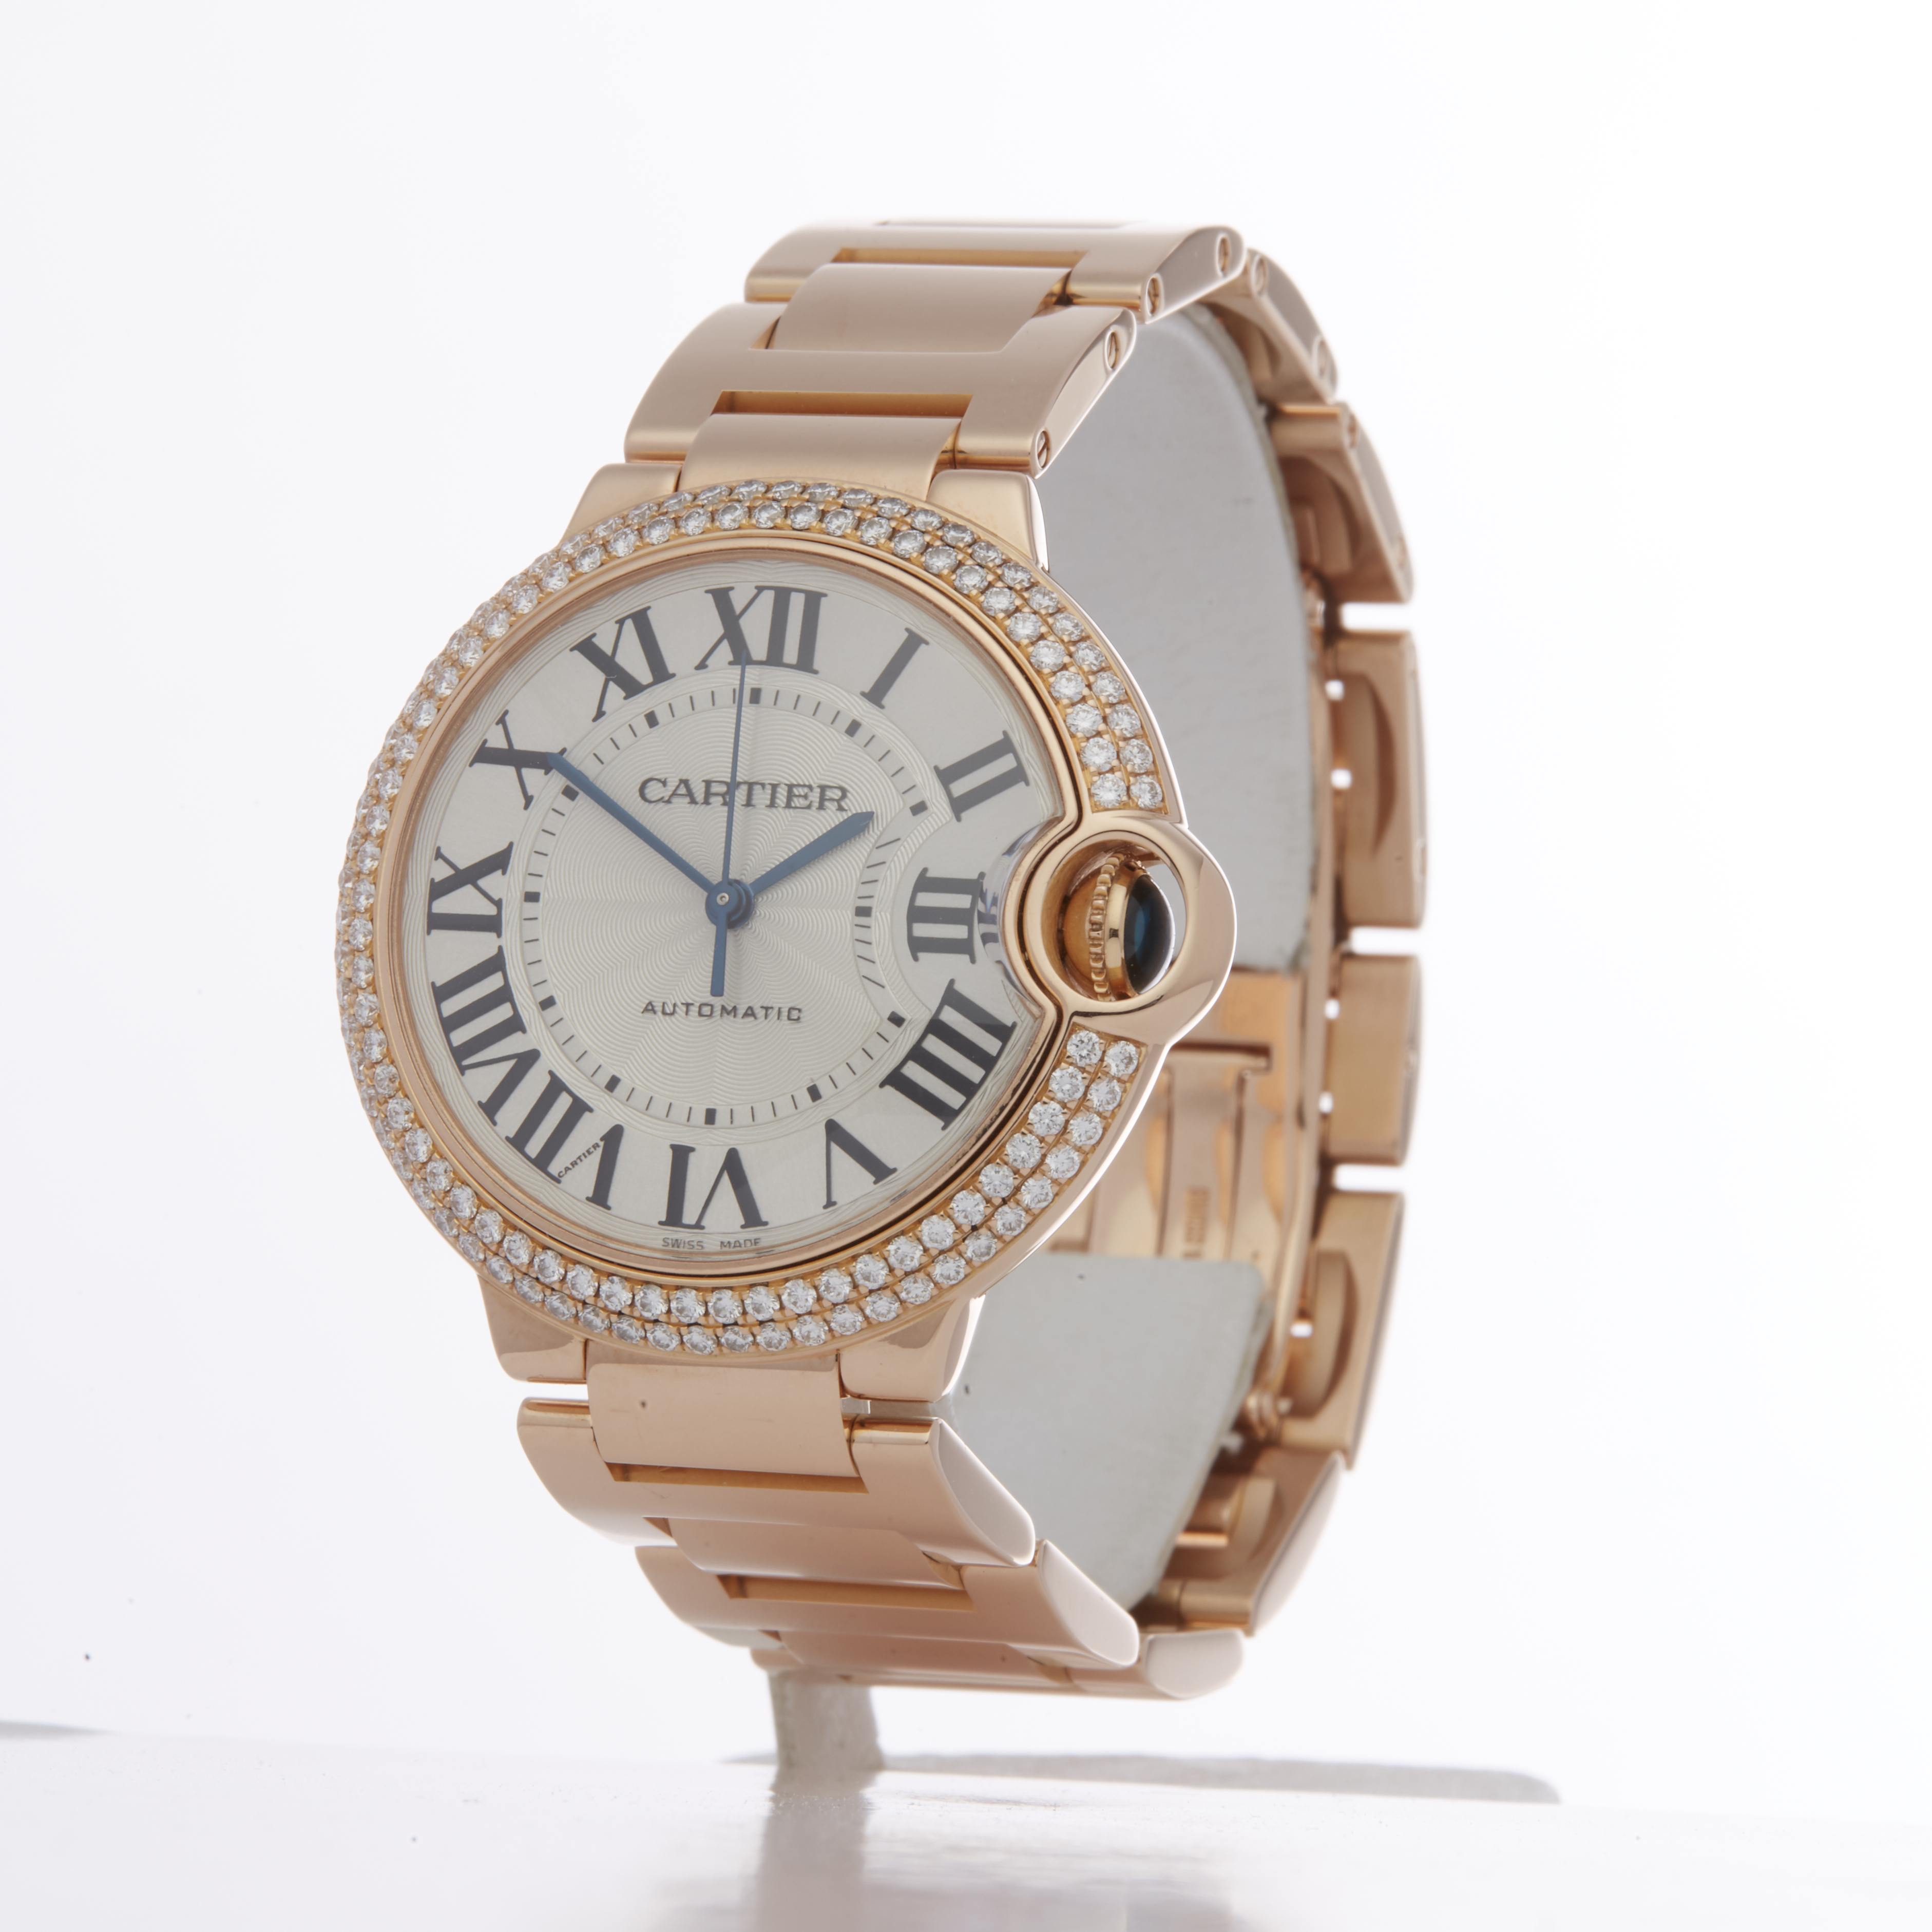 Cartier Ballon Bleu 36 WJBB0005 or 3003 Ladies Rose Gold Diamond Watch